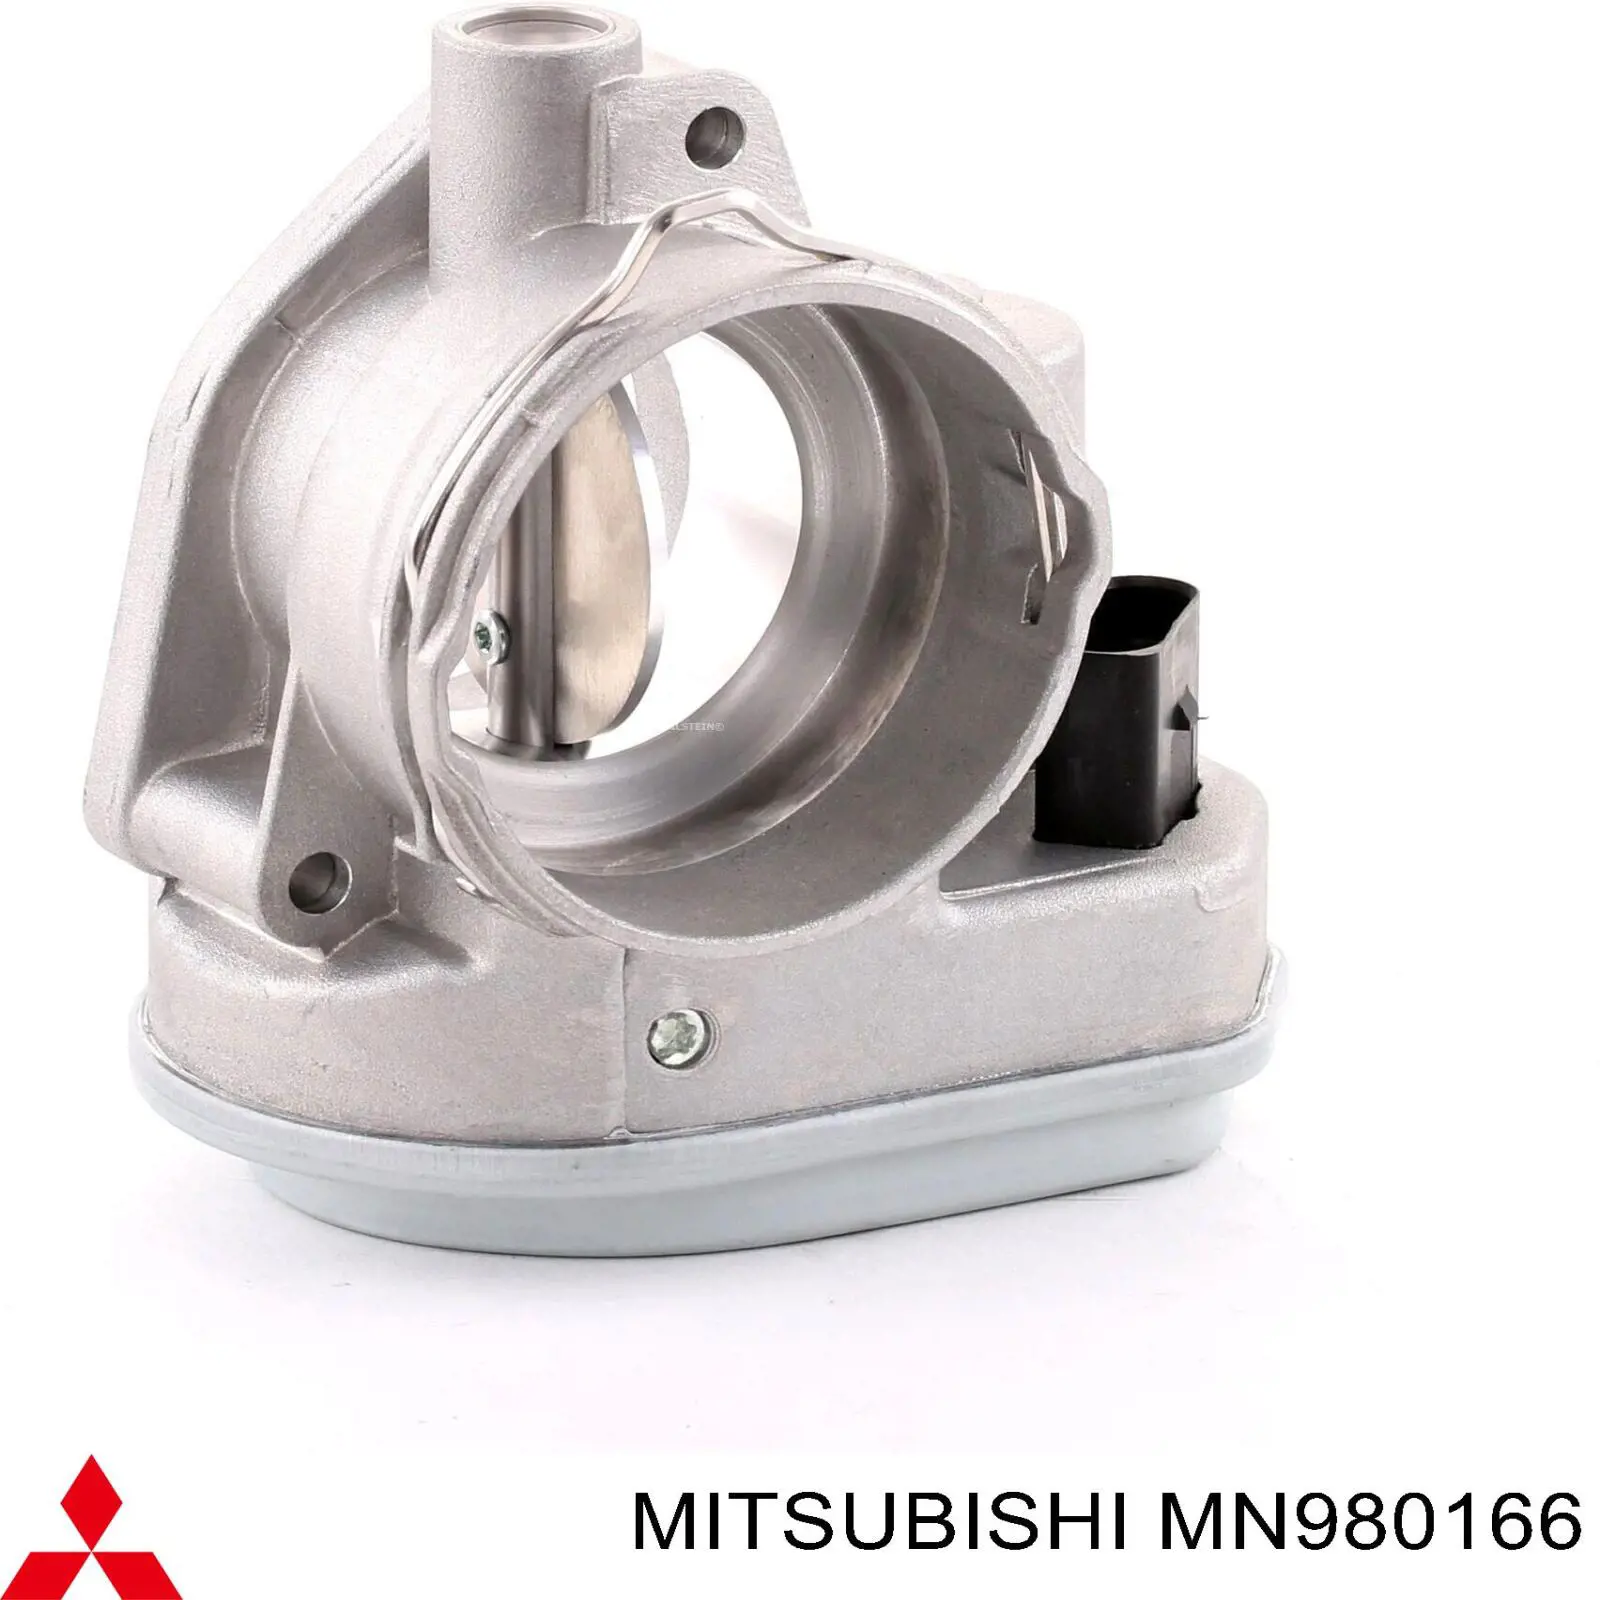 MN980166 Mitsubishi